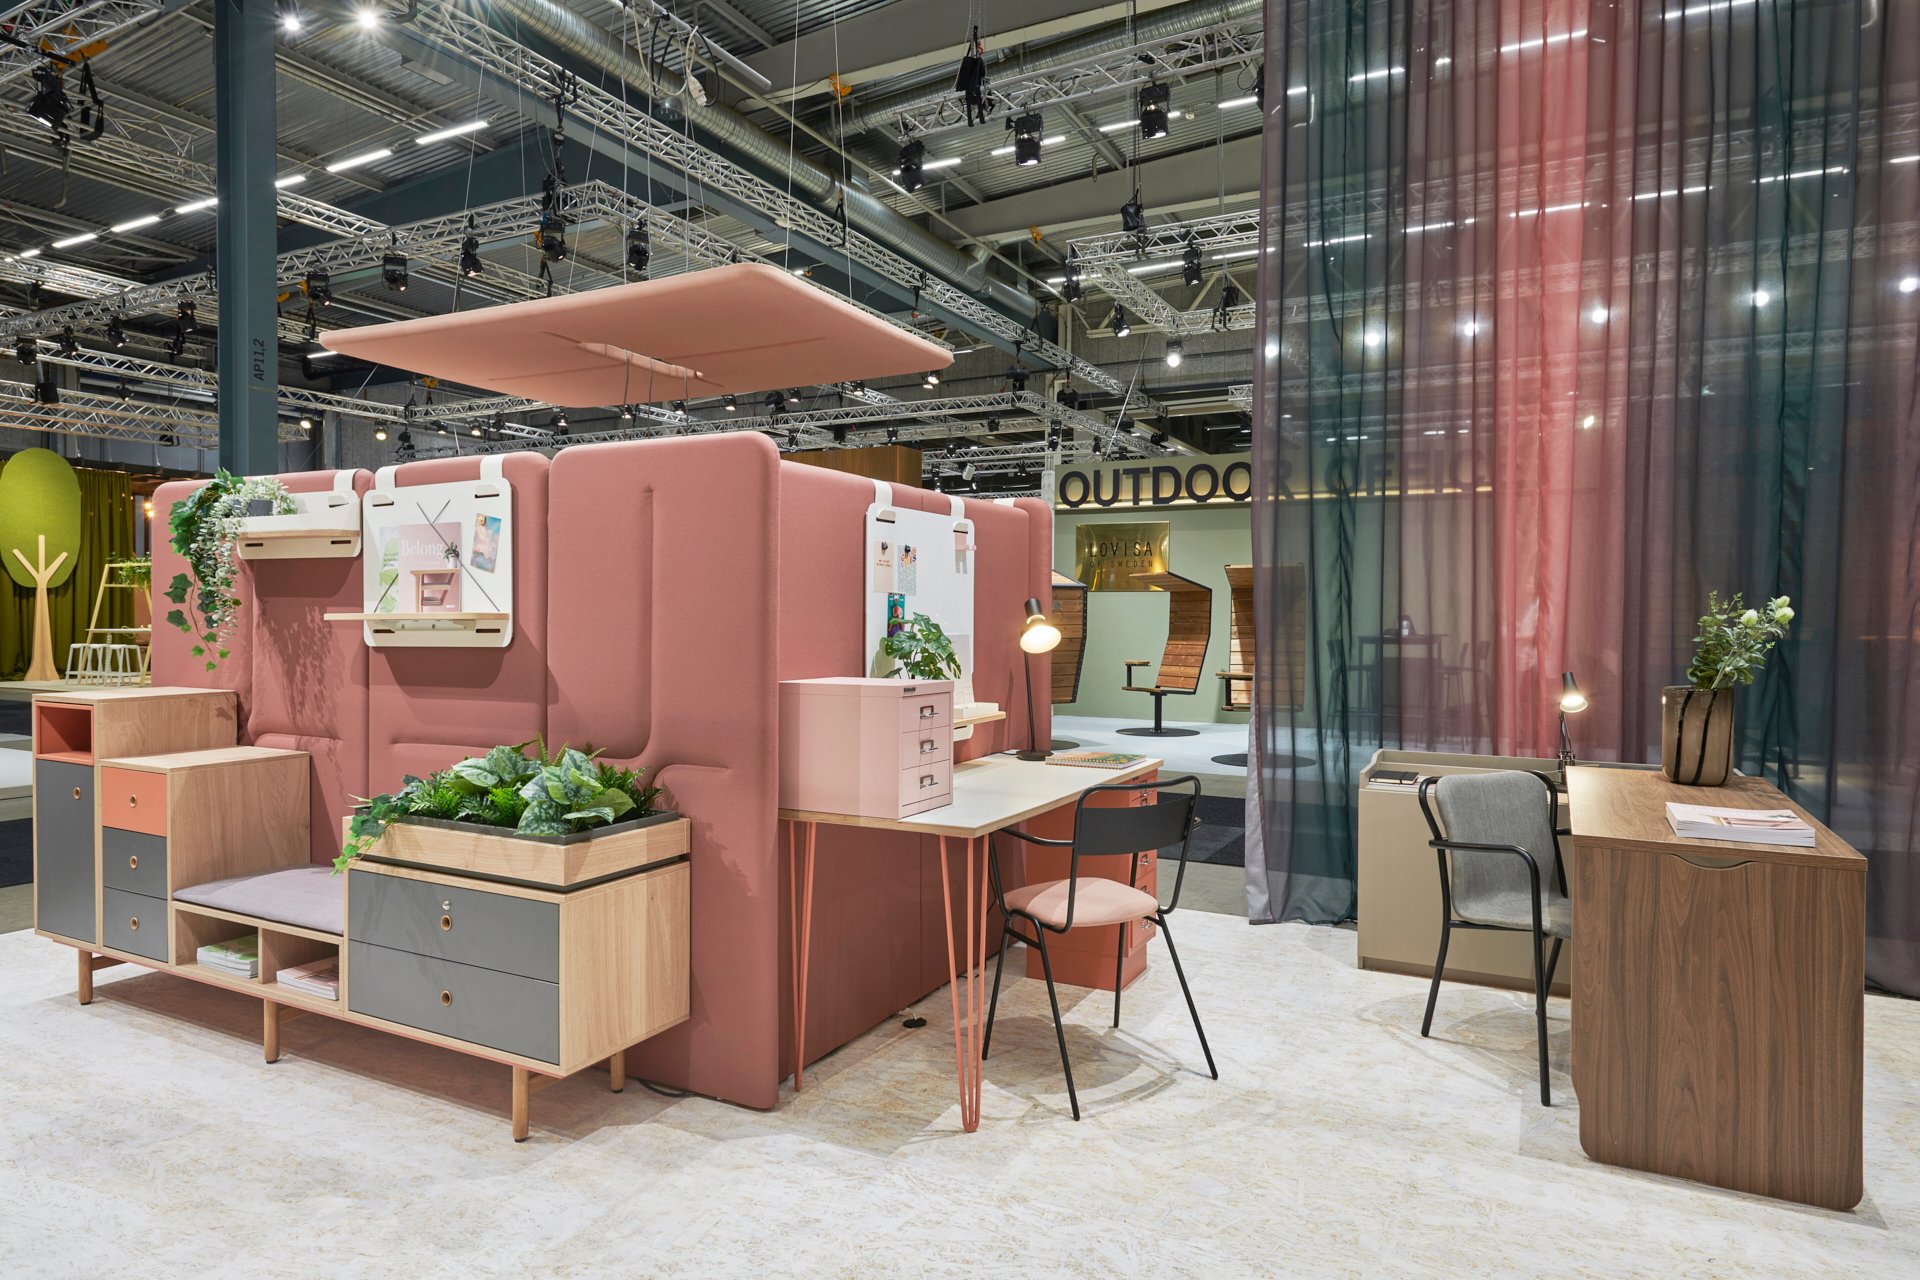 Bisley makes its Stockholm Furniture Fair debut